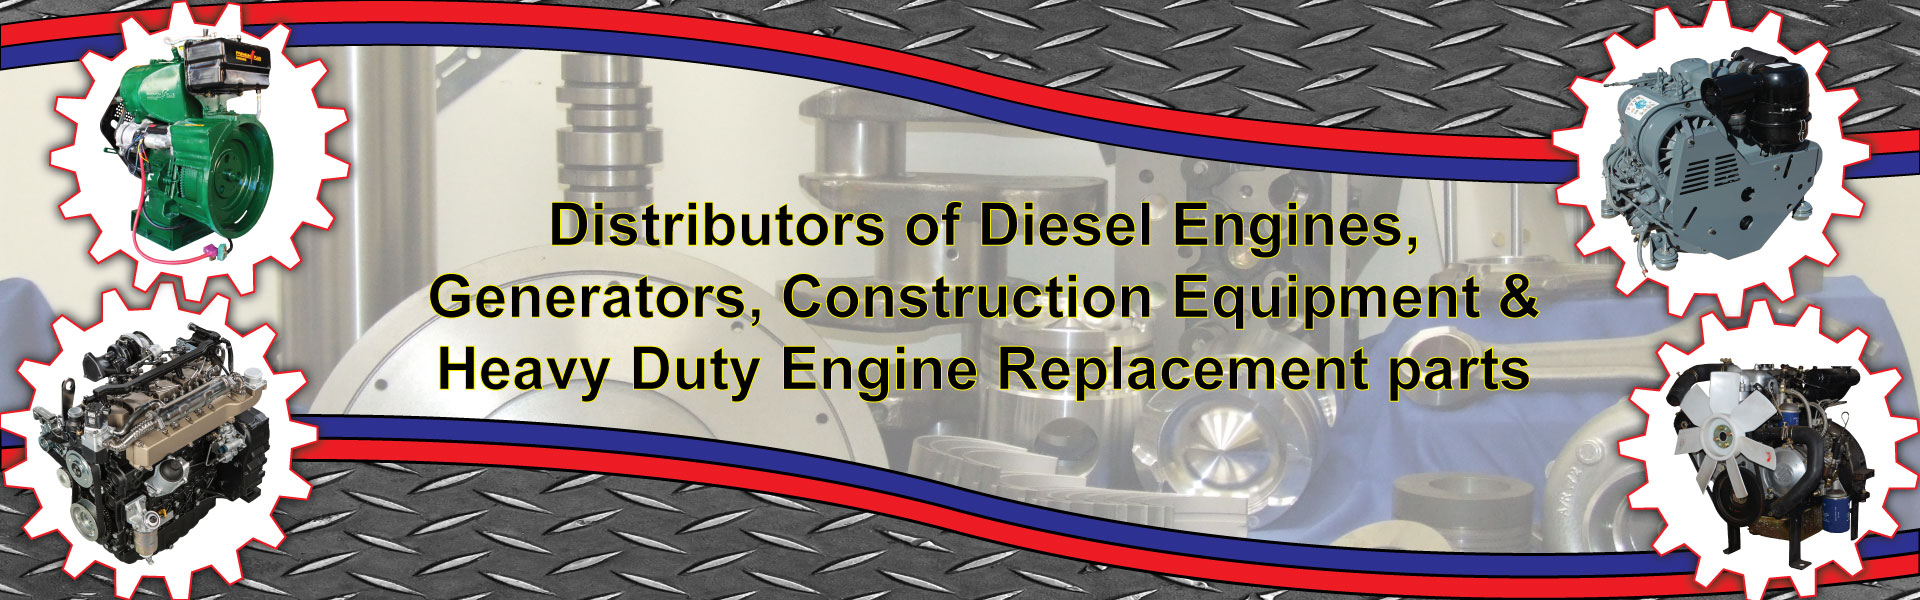 Distributors-of-diesel-engines,-generators,-construction-equipment-and-parts-2022